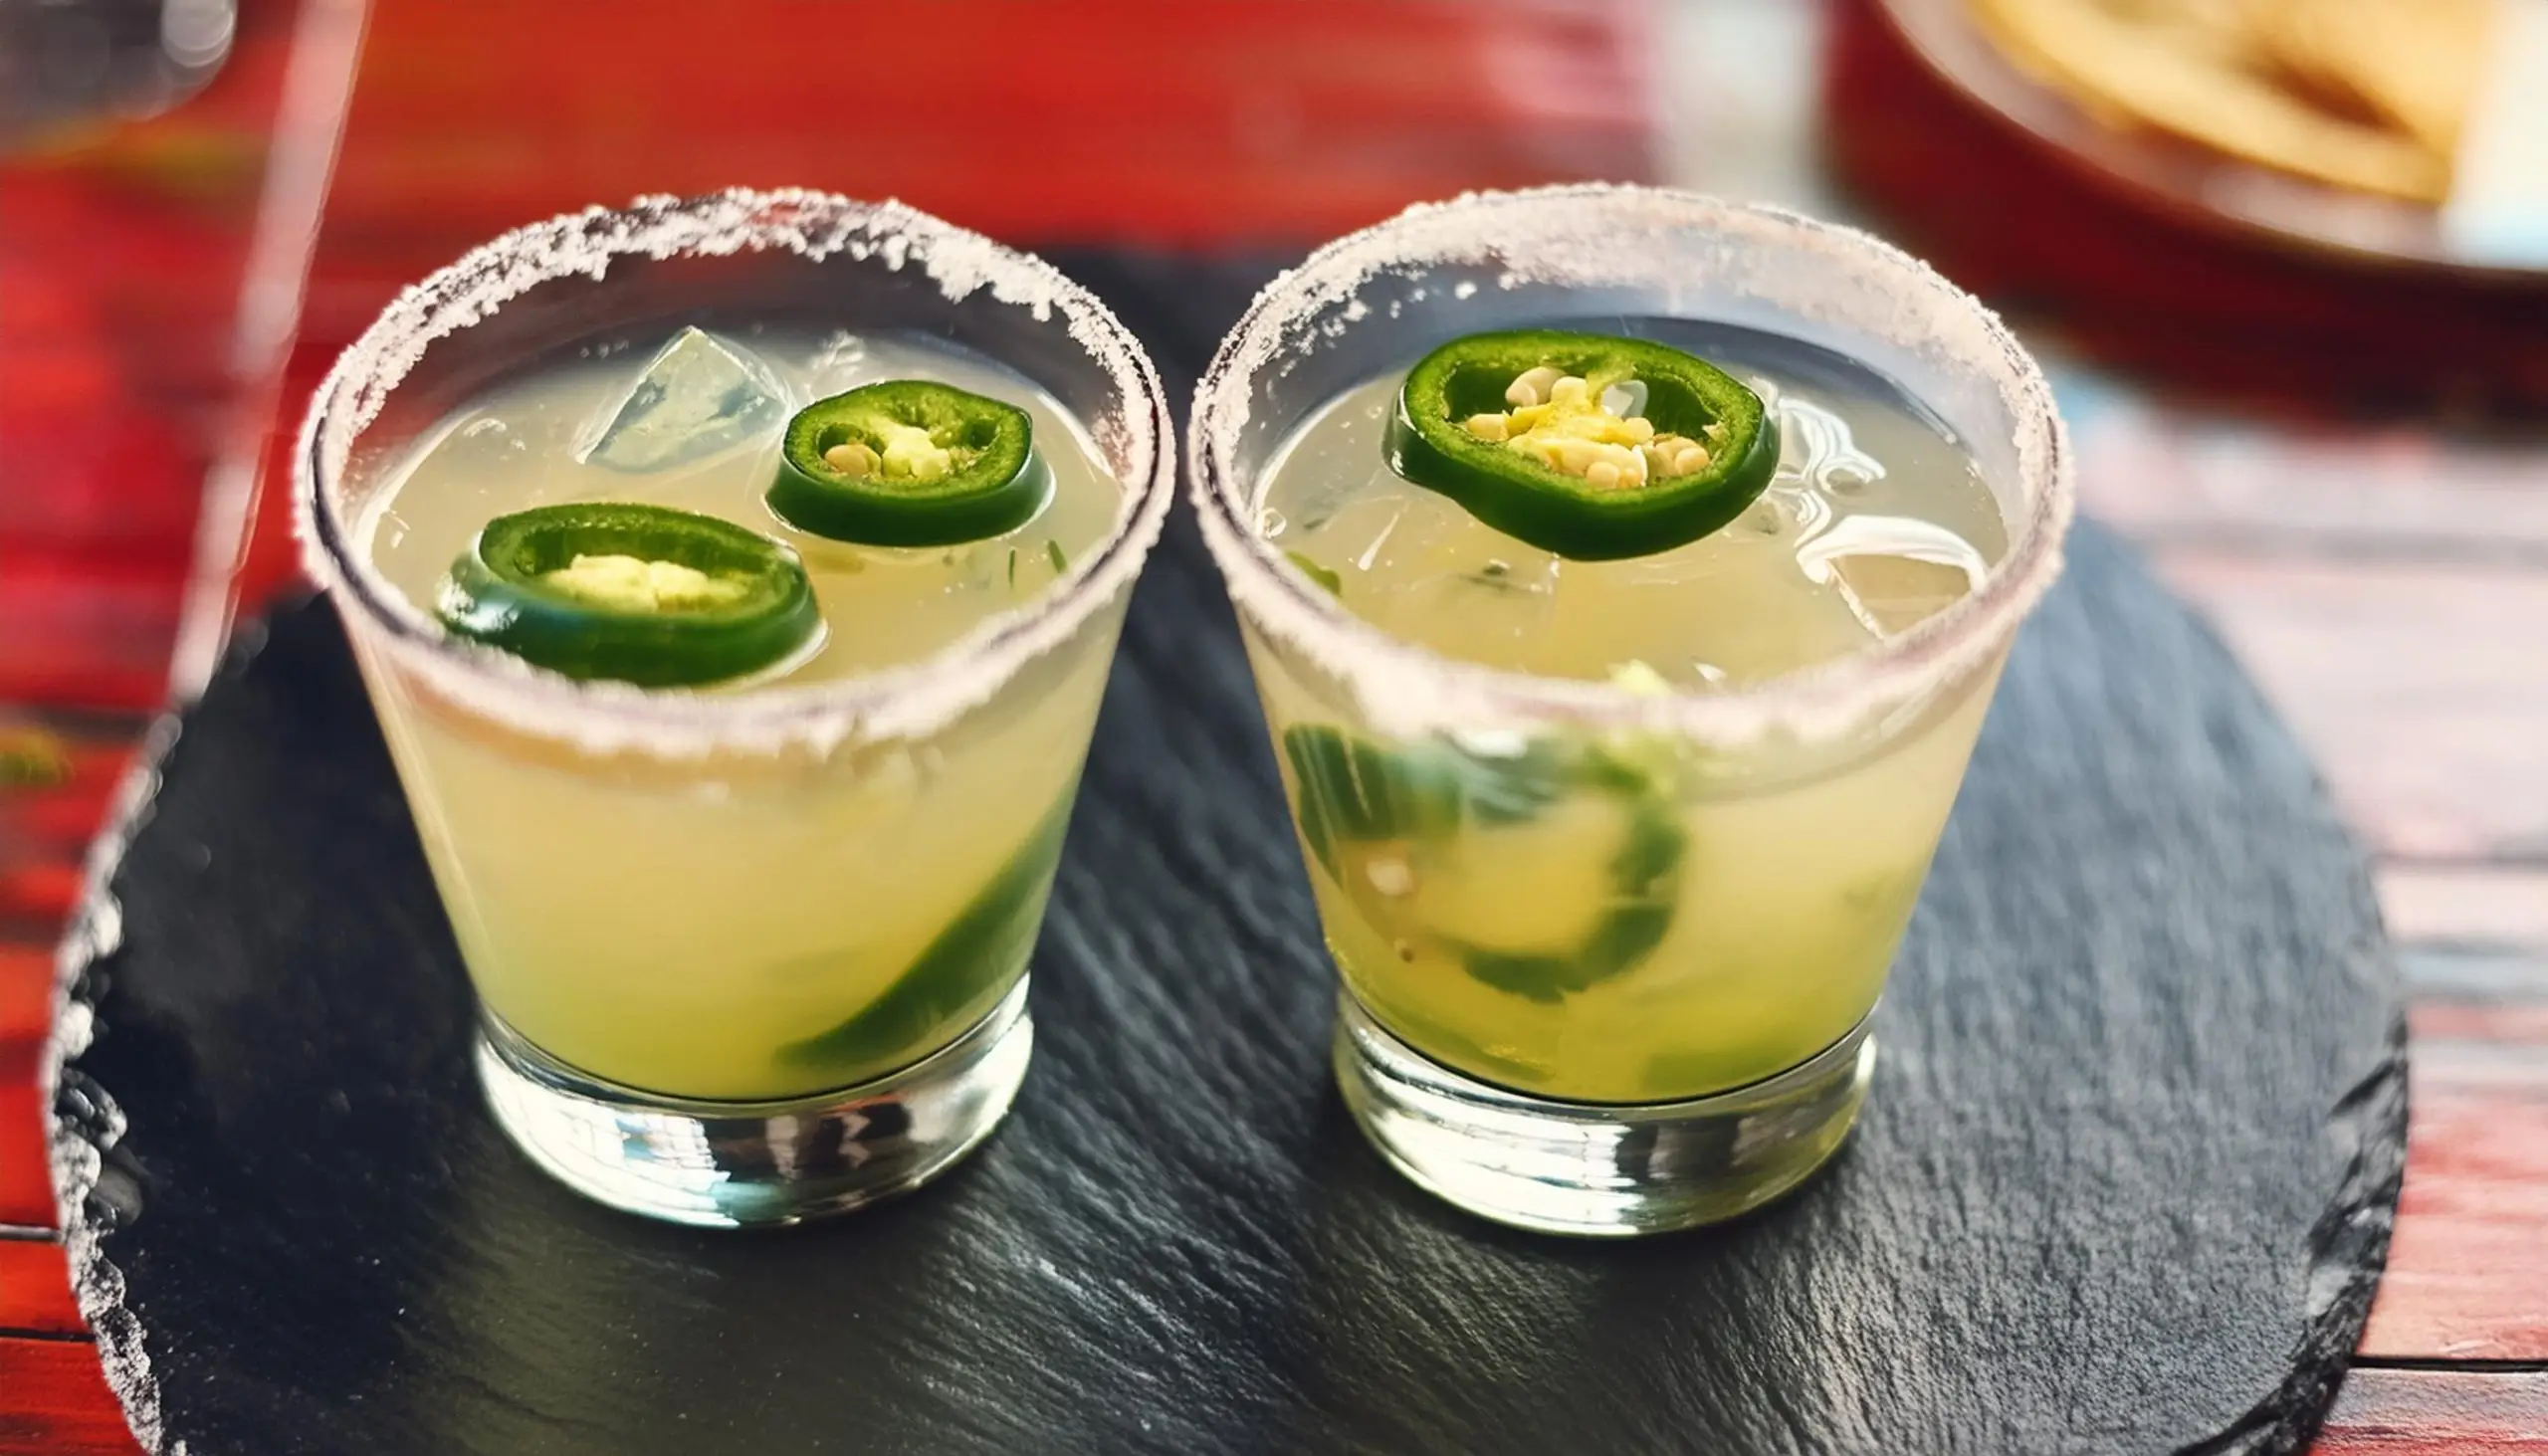 Two Spicy Añejo Margarita cocktails with sliced jalapeño garnish